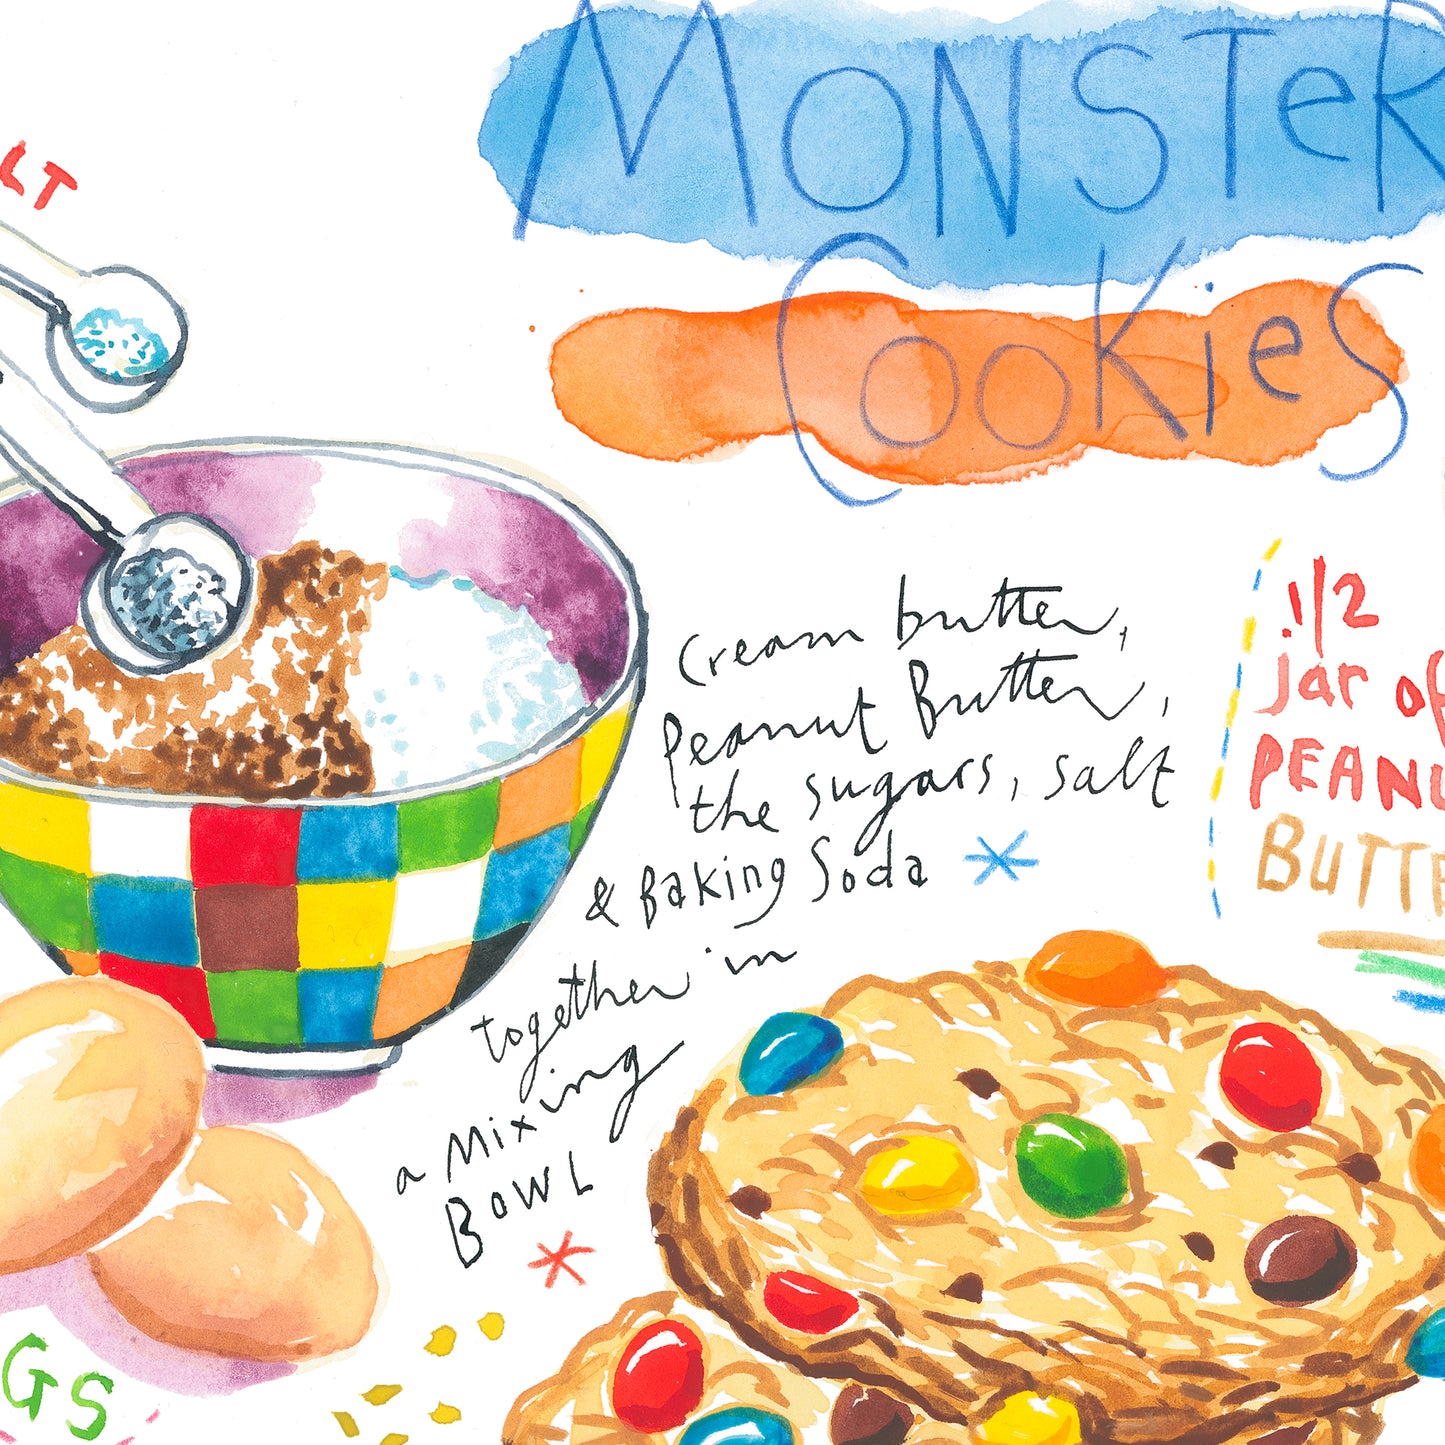 Monster Cookie recipe